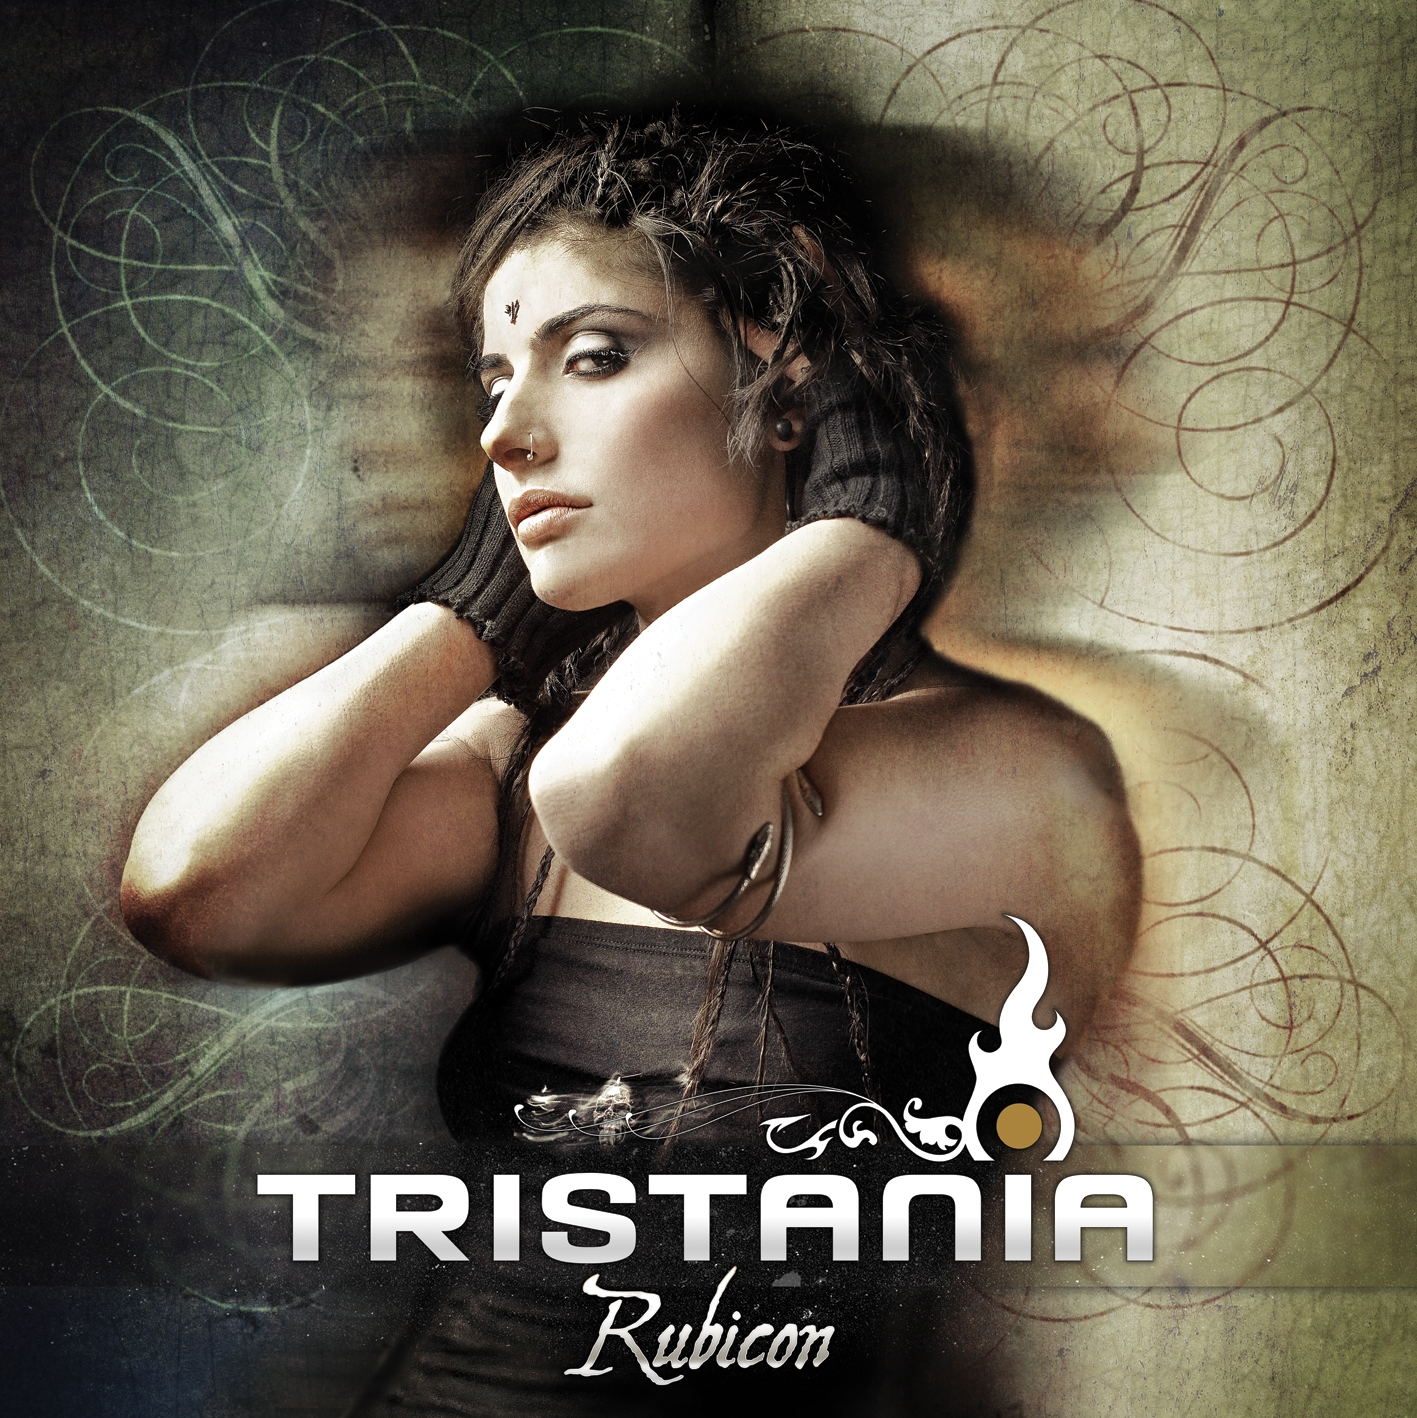 Tristania – Rubicon Review